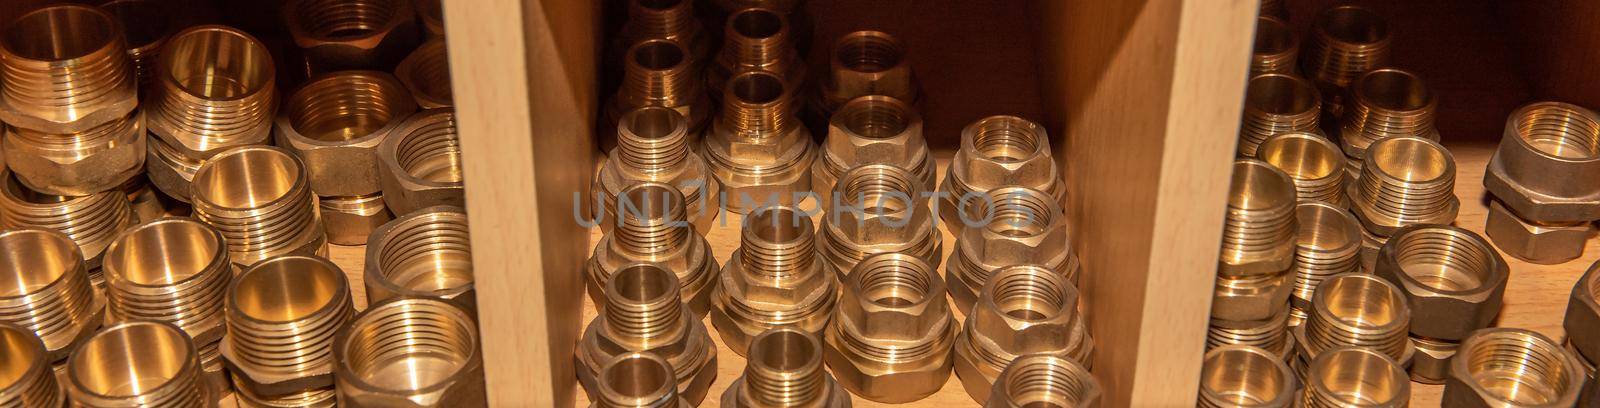 various Brass and metal fittings for plumbing by karpovkottt